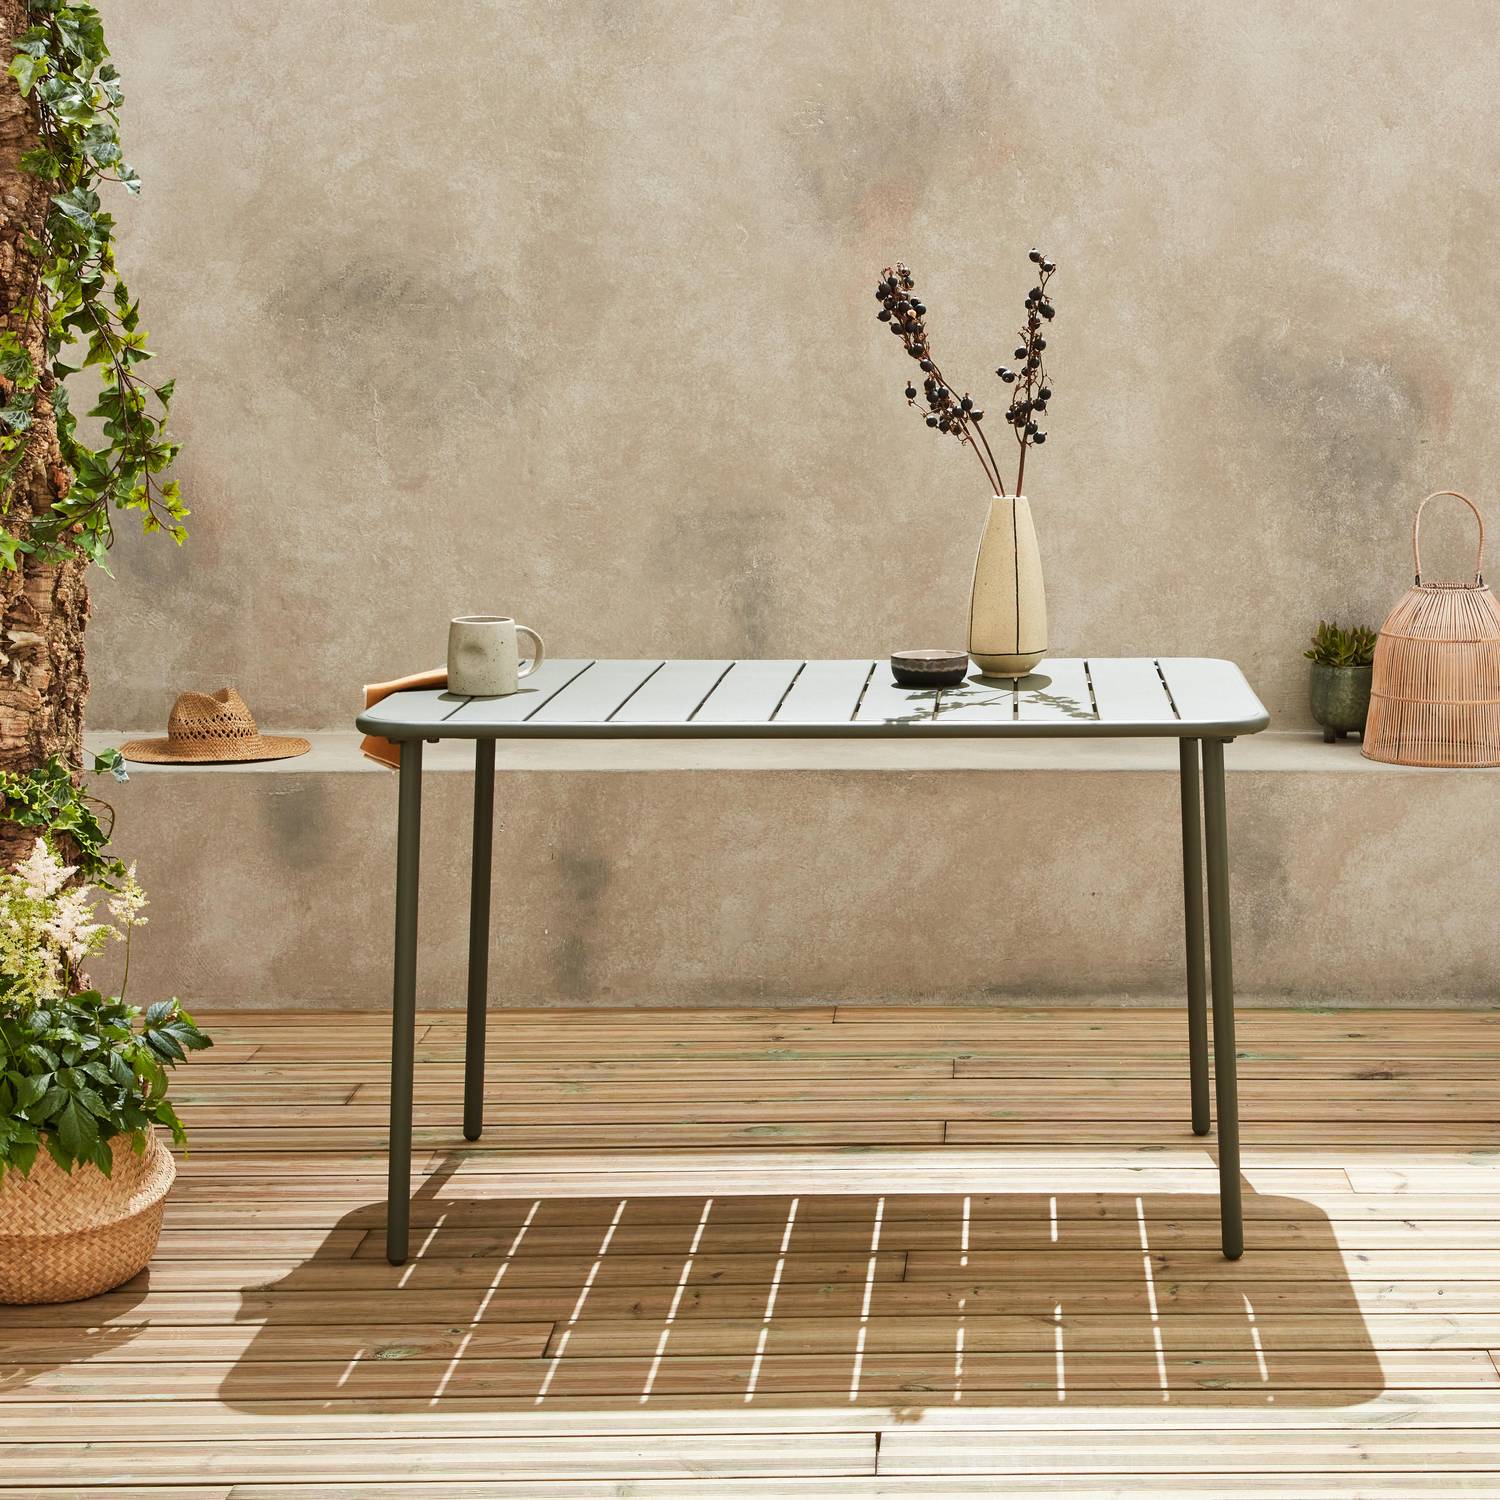 4-seater rectangular steel garden table, 120x70cm - Amelia - Khaki Green Photo1